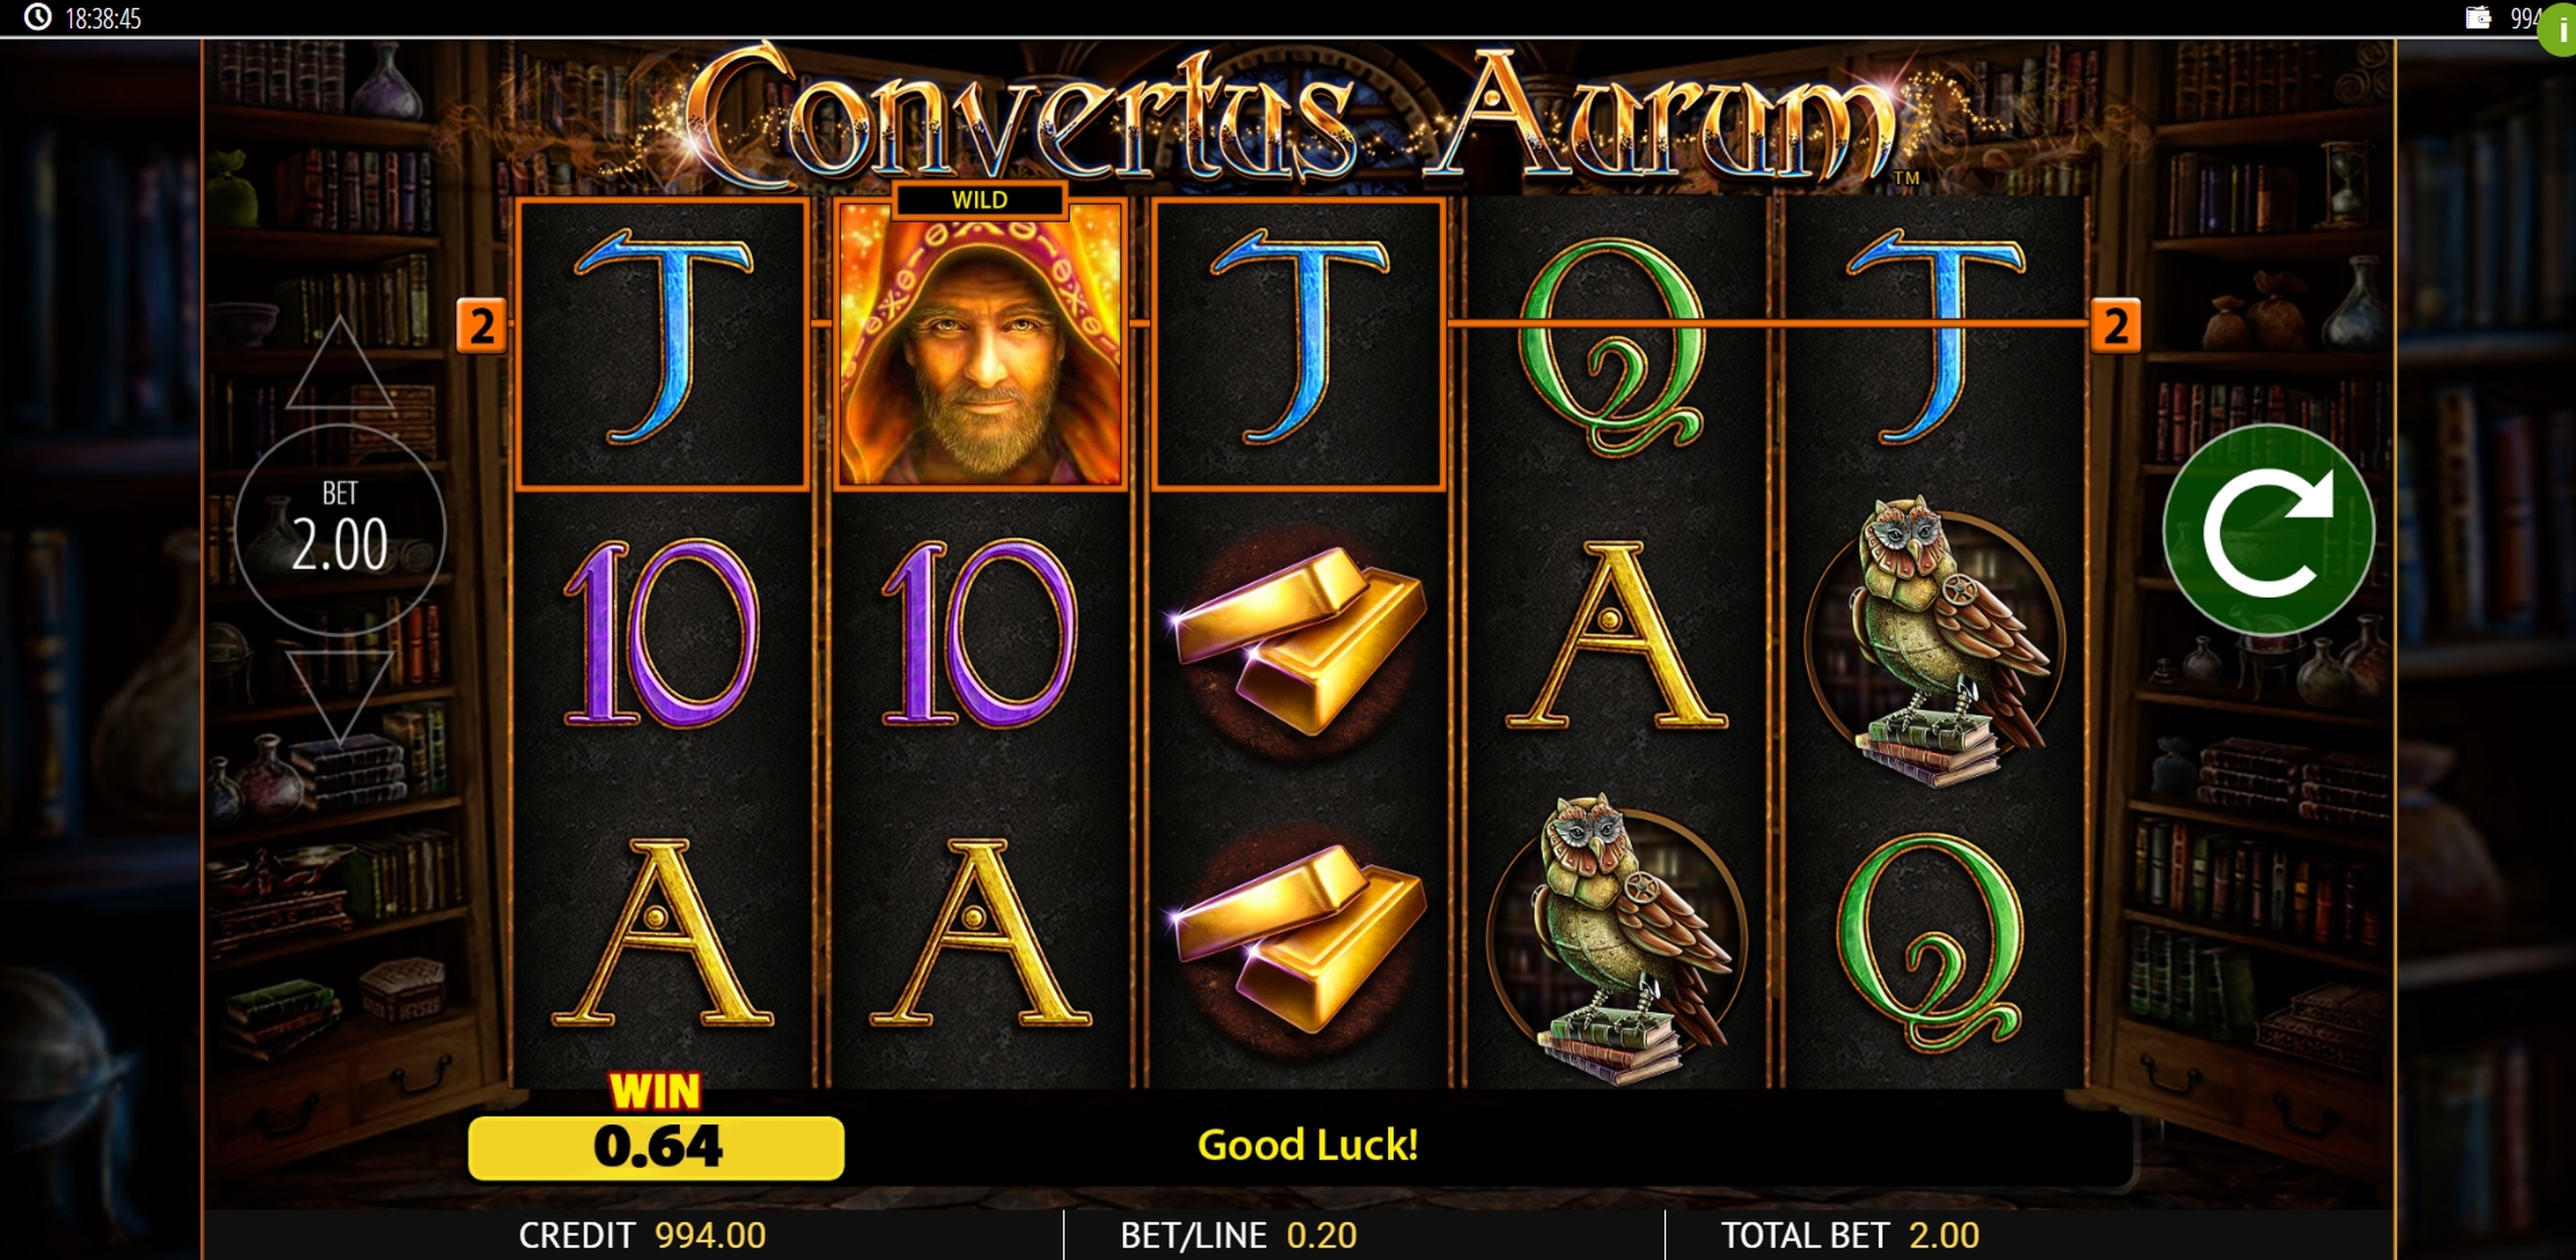 Win Money in Convertus Aurum Free Slot Game by Reel Time Gaming